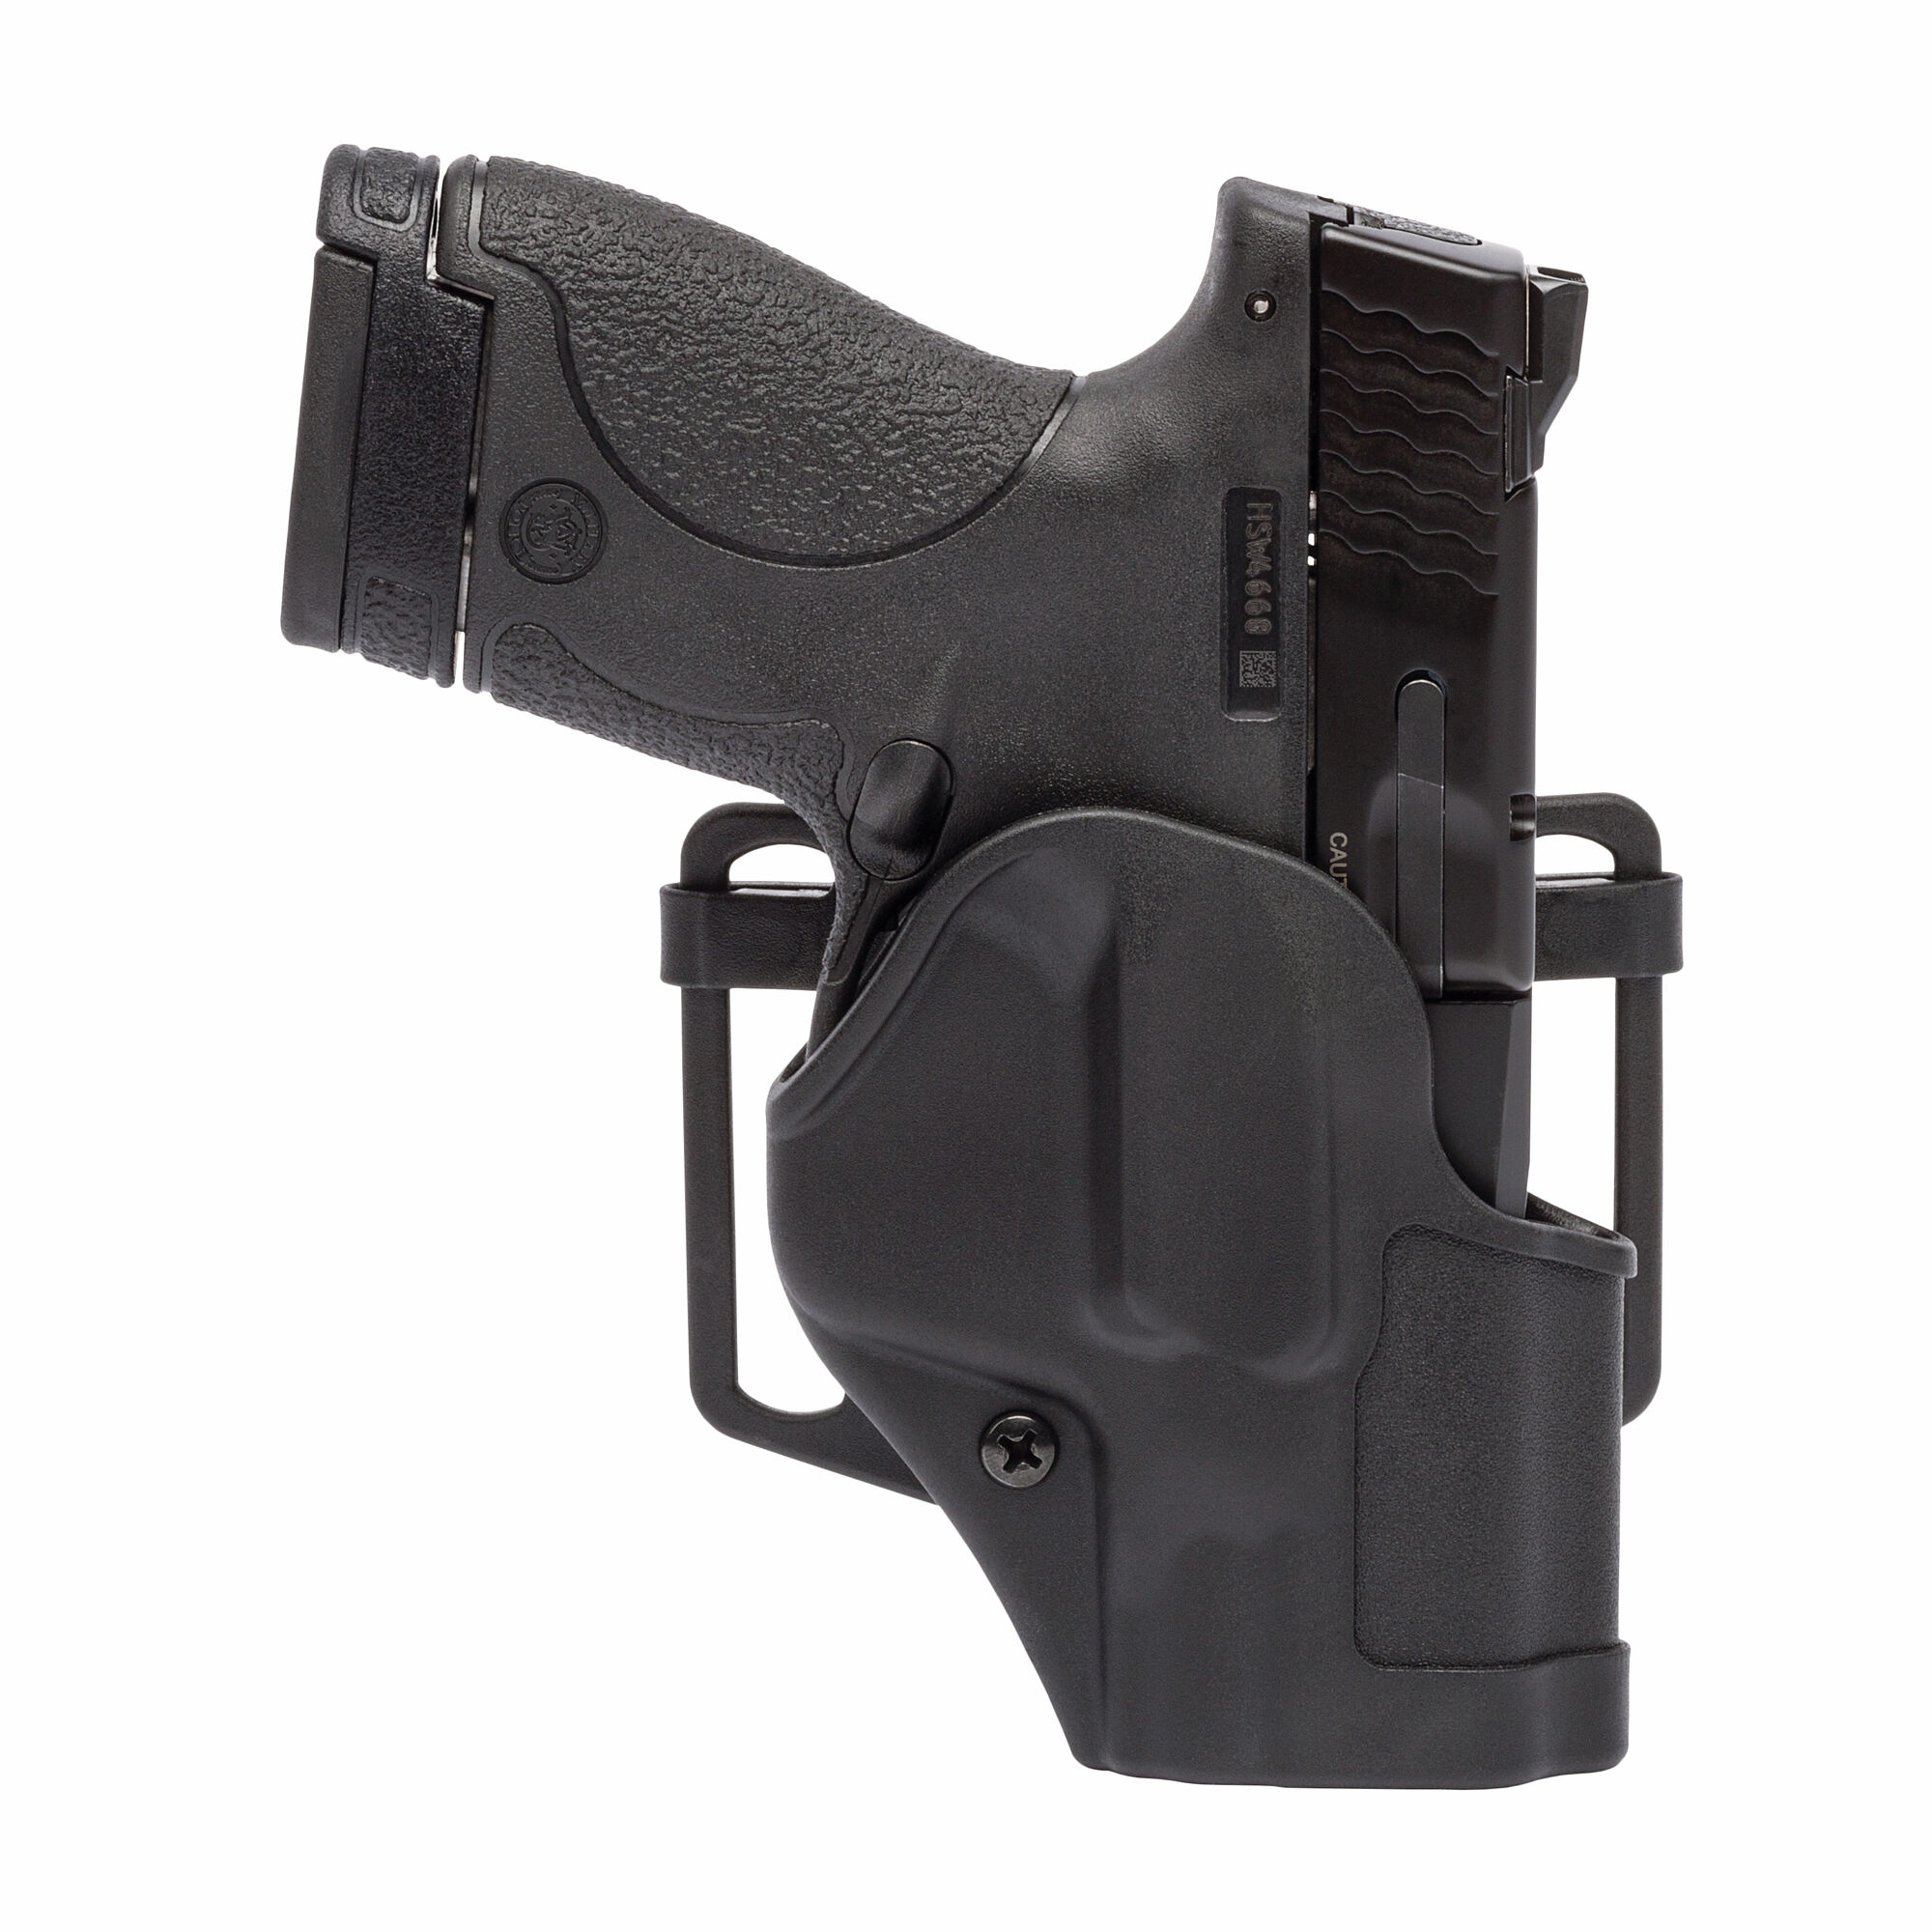 BLACKHAWK Sportster Standard CQC Concealment Holster fits M&P Shield 